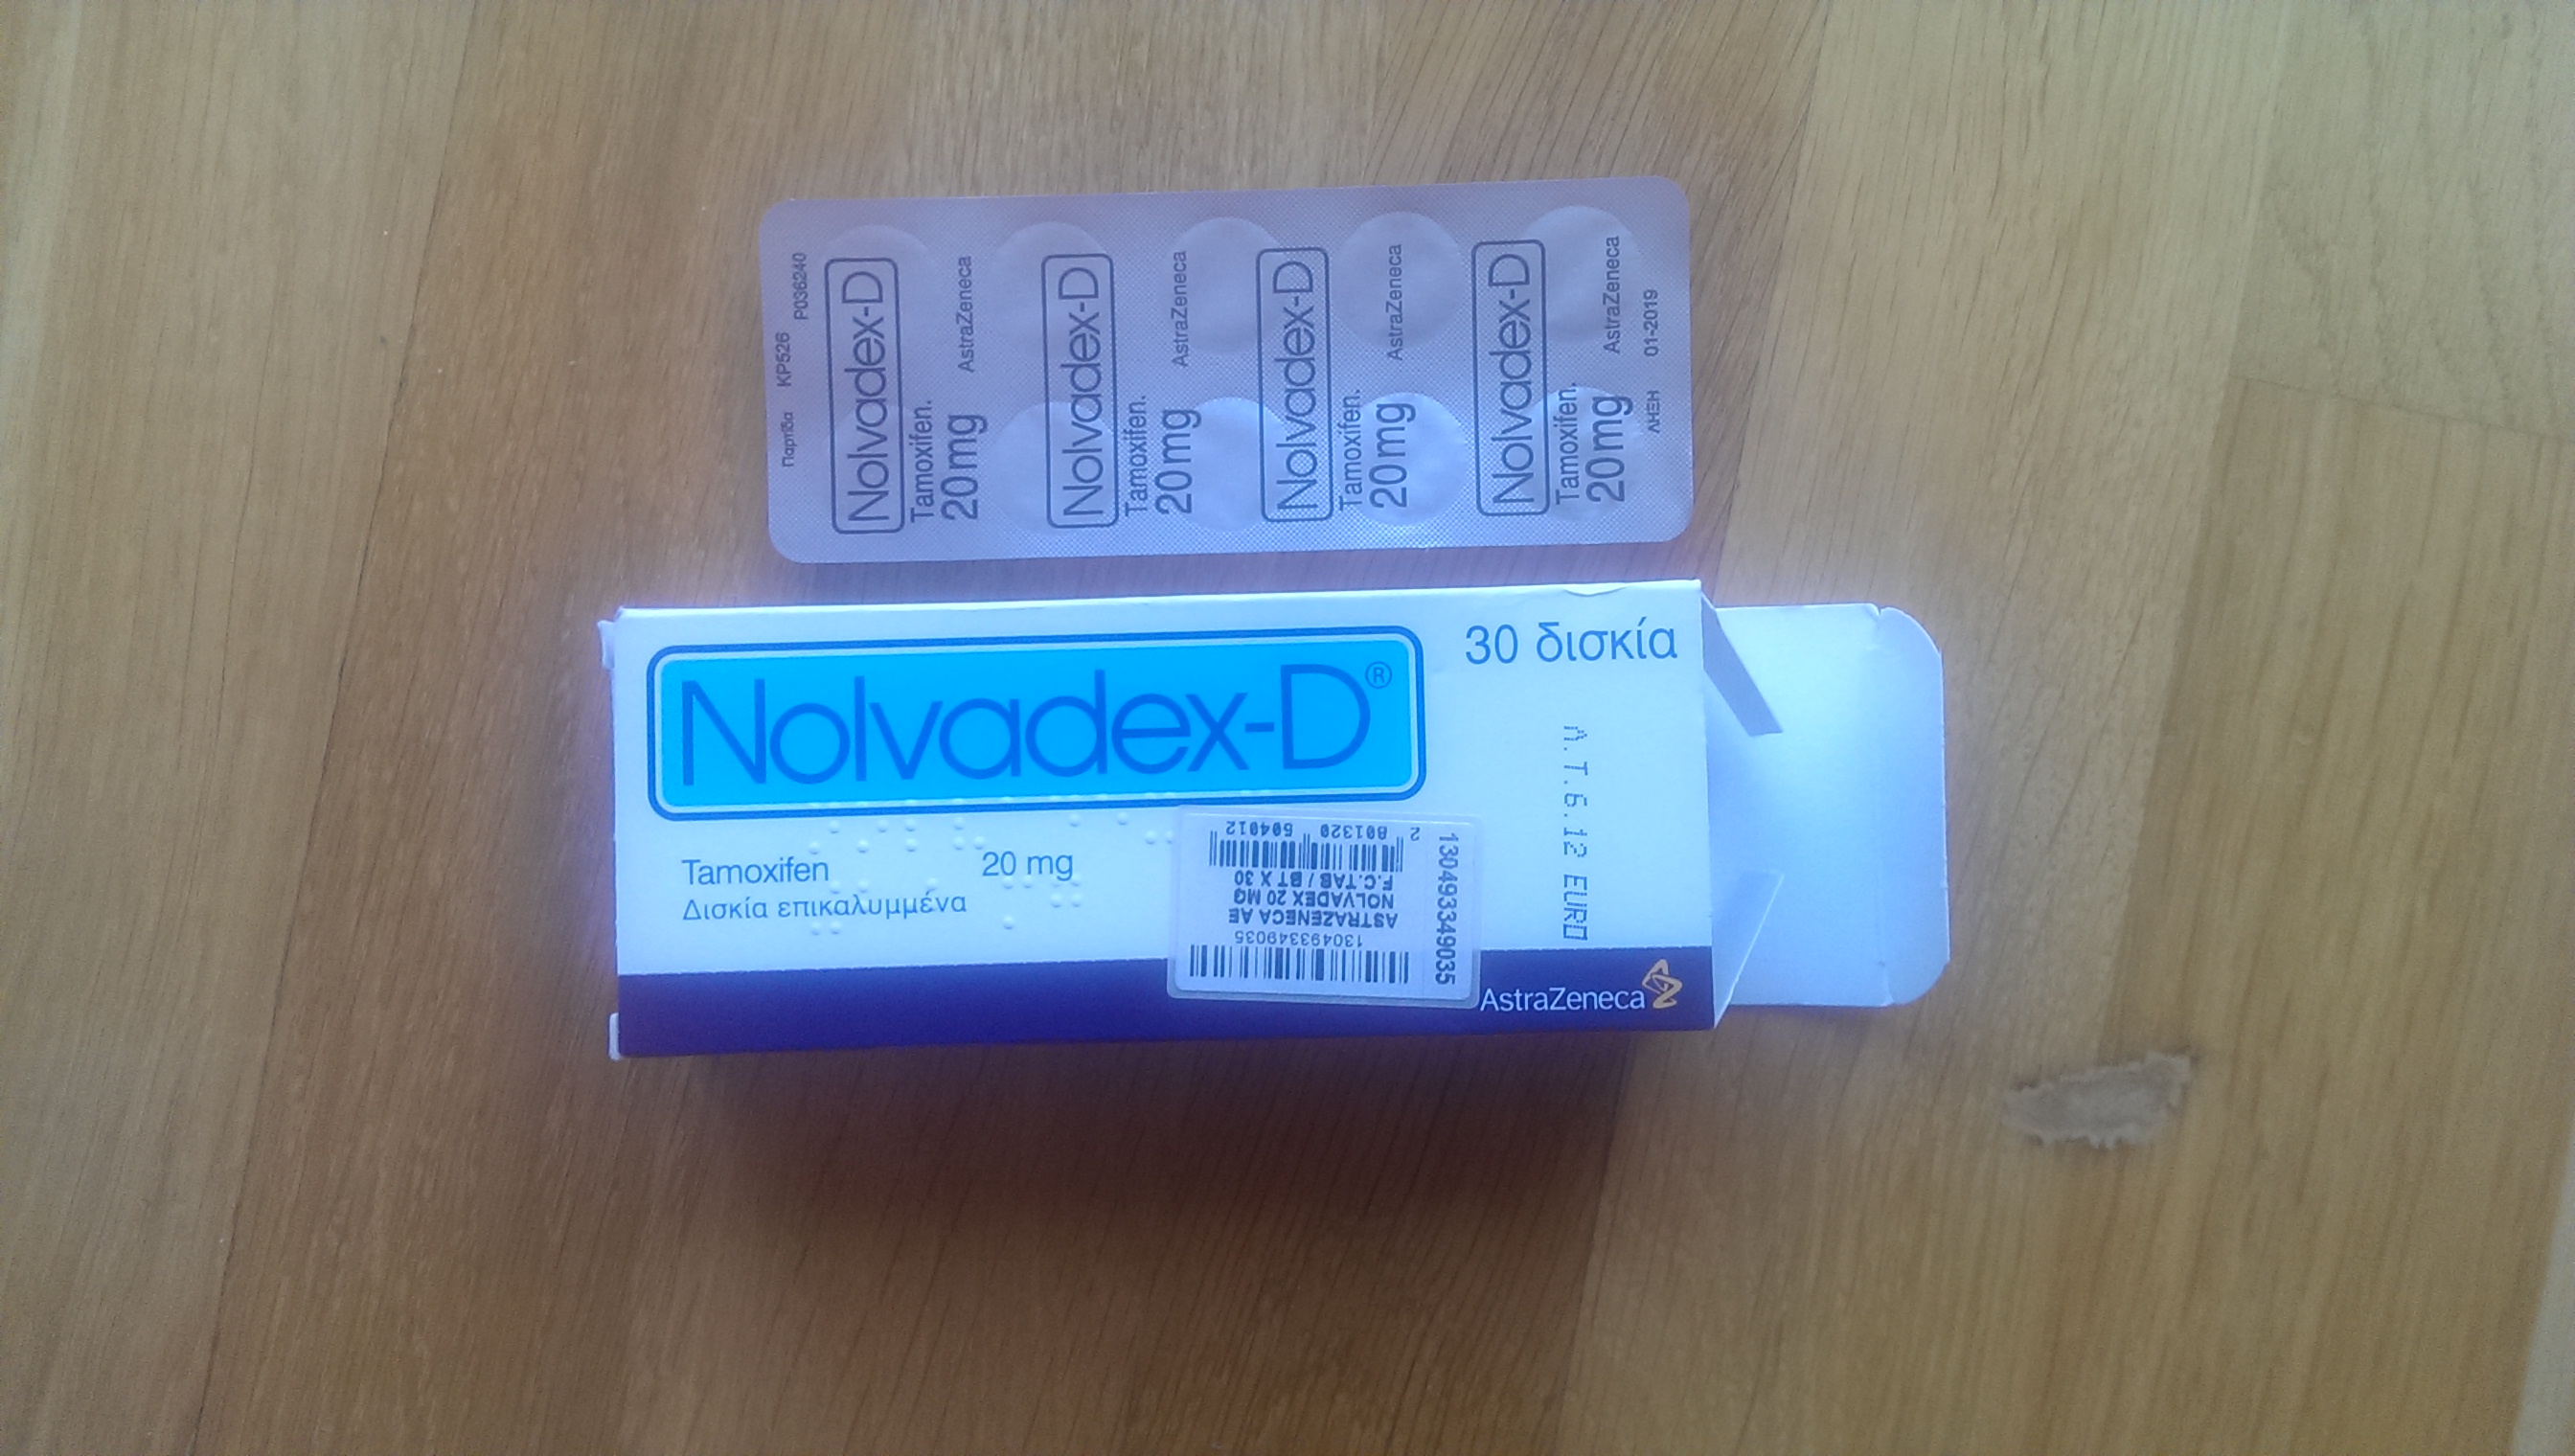 doxycycline hyclate tablets